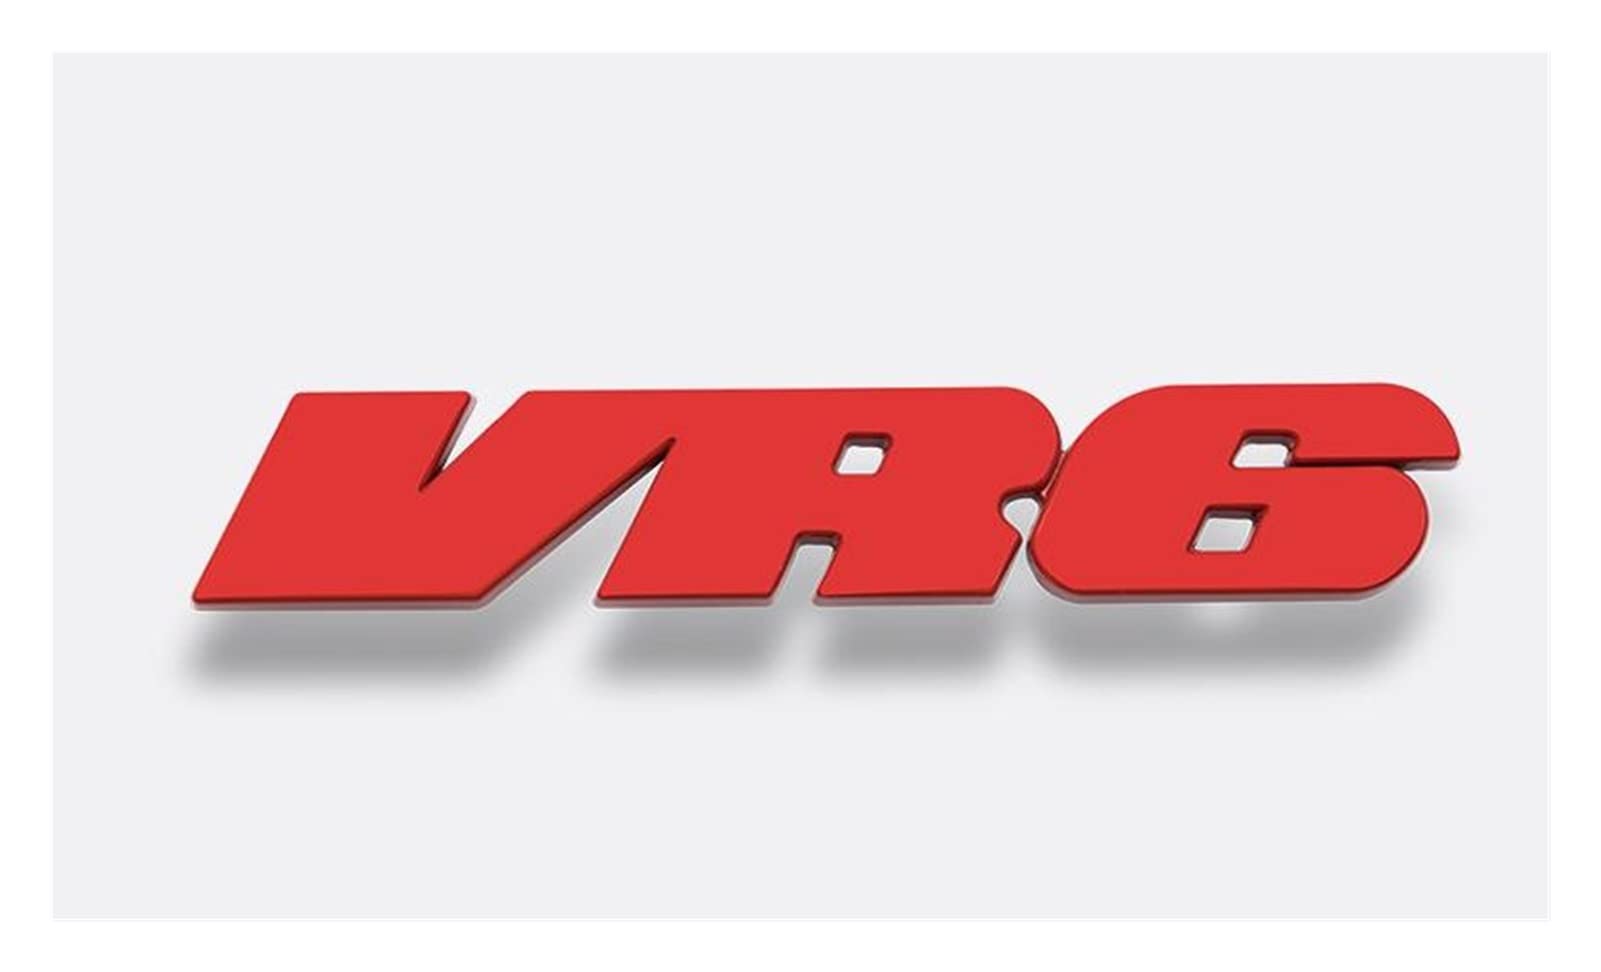 PRDECE Metalllegierung Vr6. Autoaufkleber Emblem Abzeichen Embleme Emblema Auto Aufkleber für das Auto (Color Name : Red)